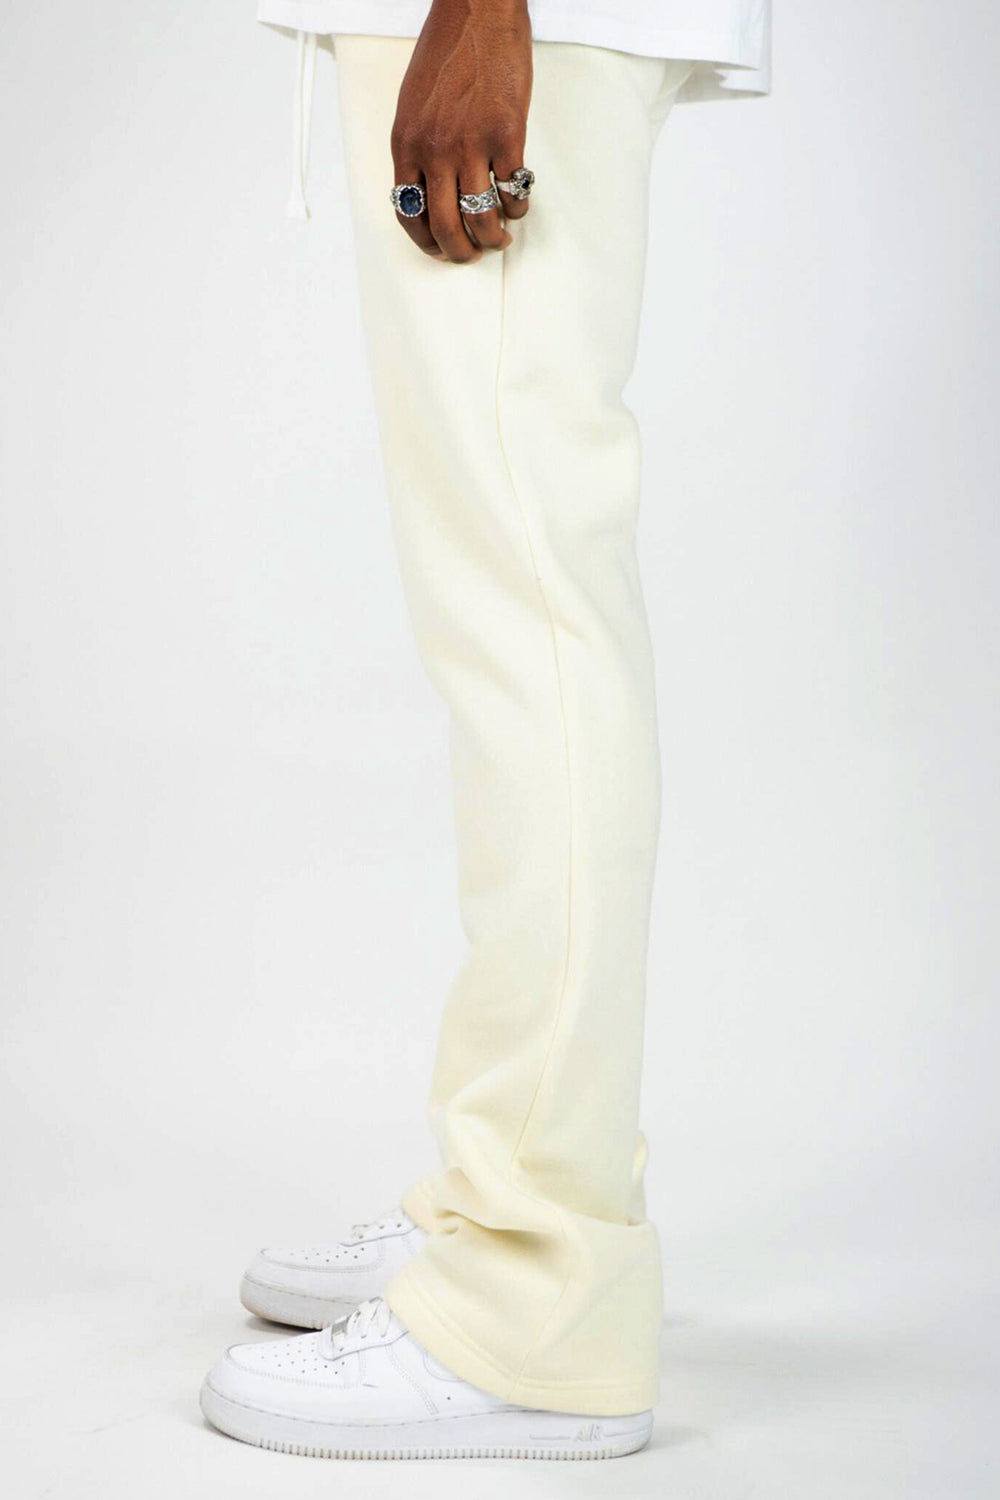 Fleece Stacked Fit Pant (Cream) (100-475) - Zamage